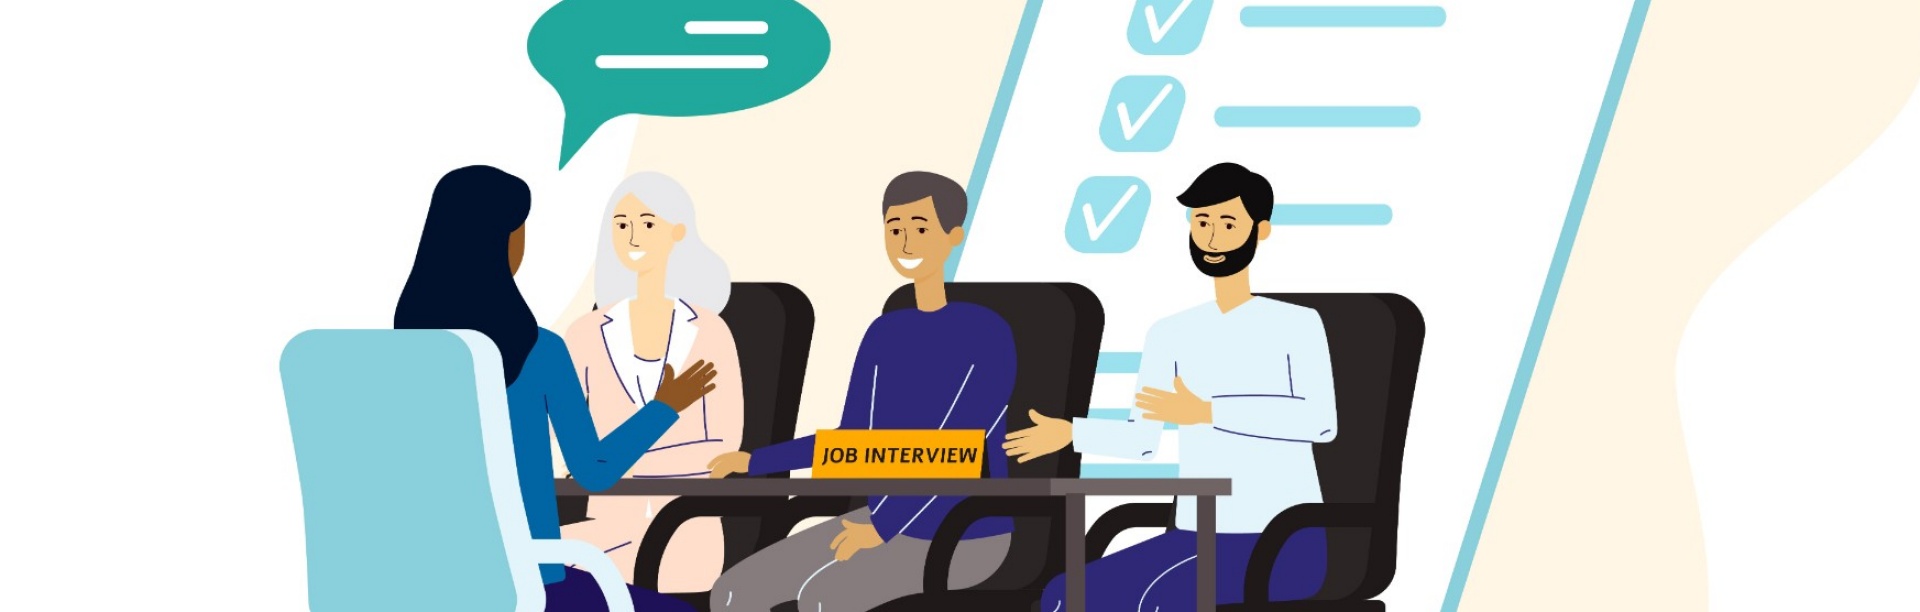 Illustration of a job interview. 